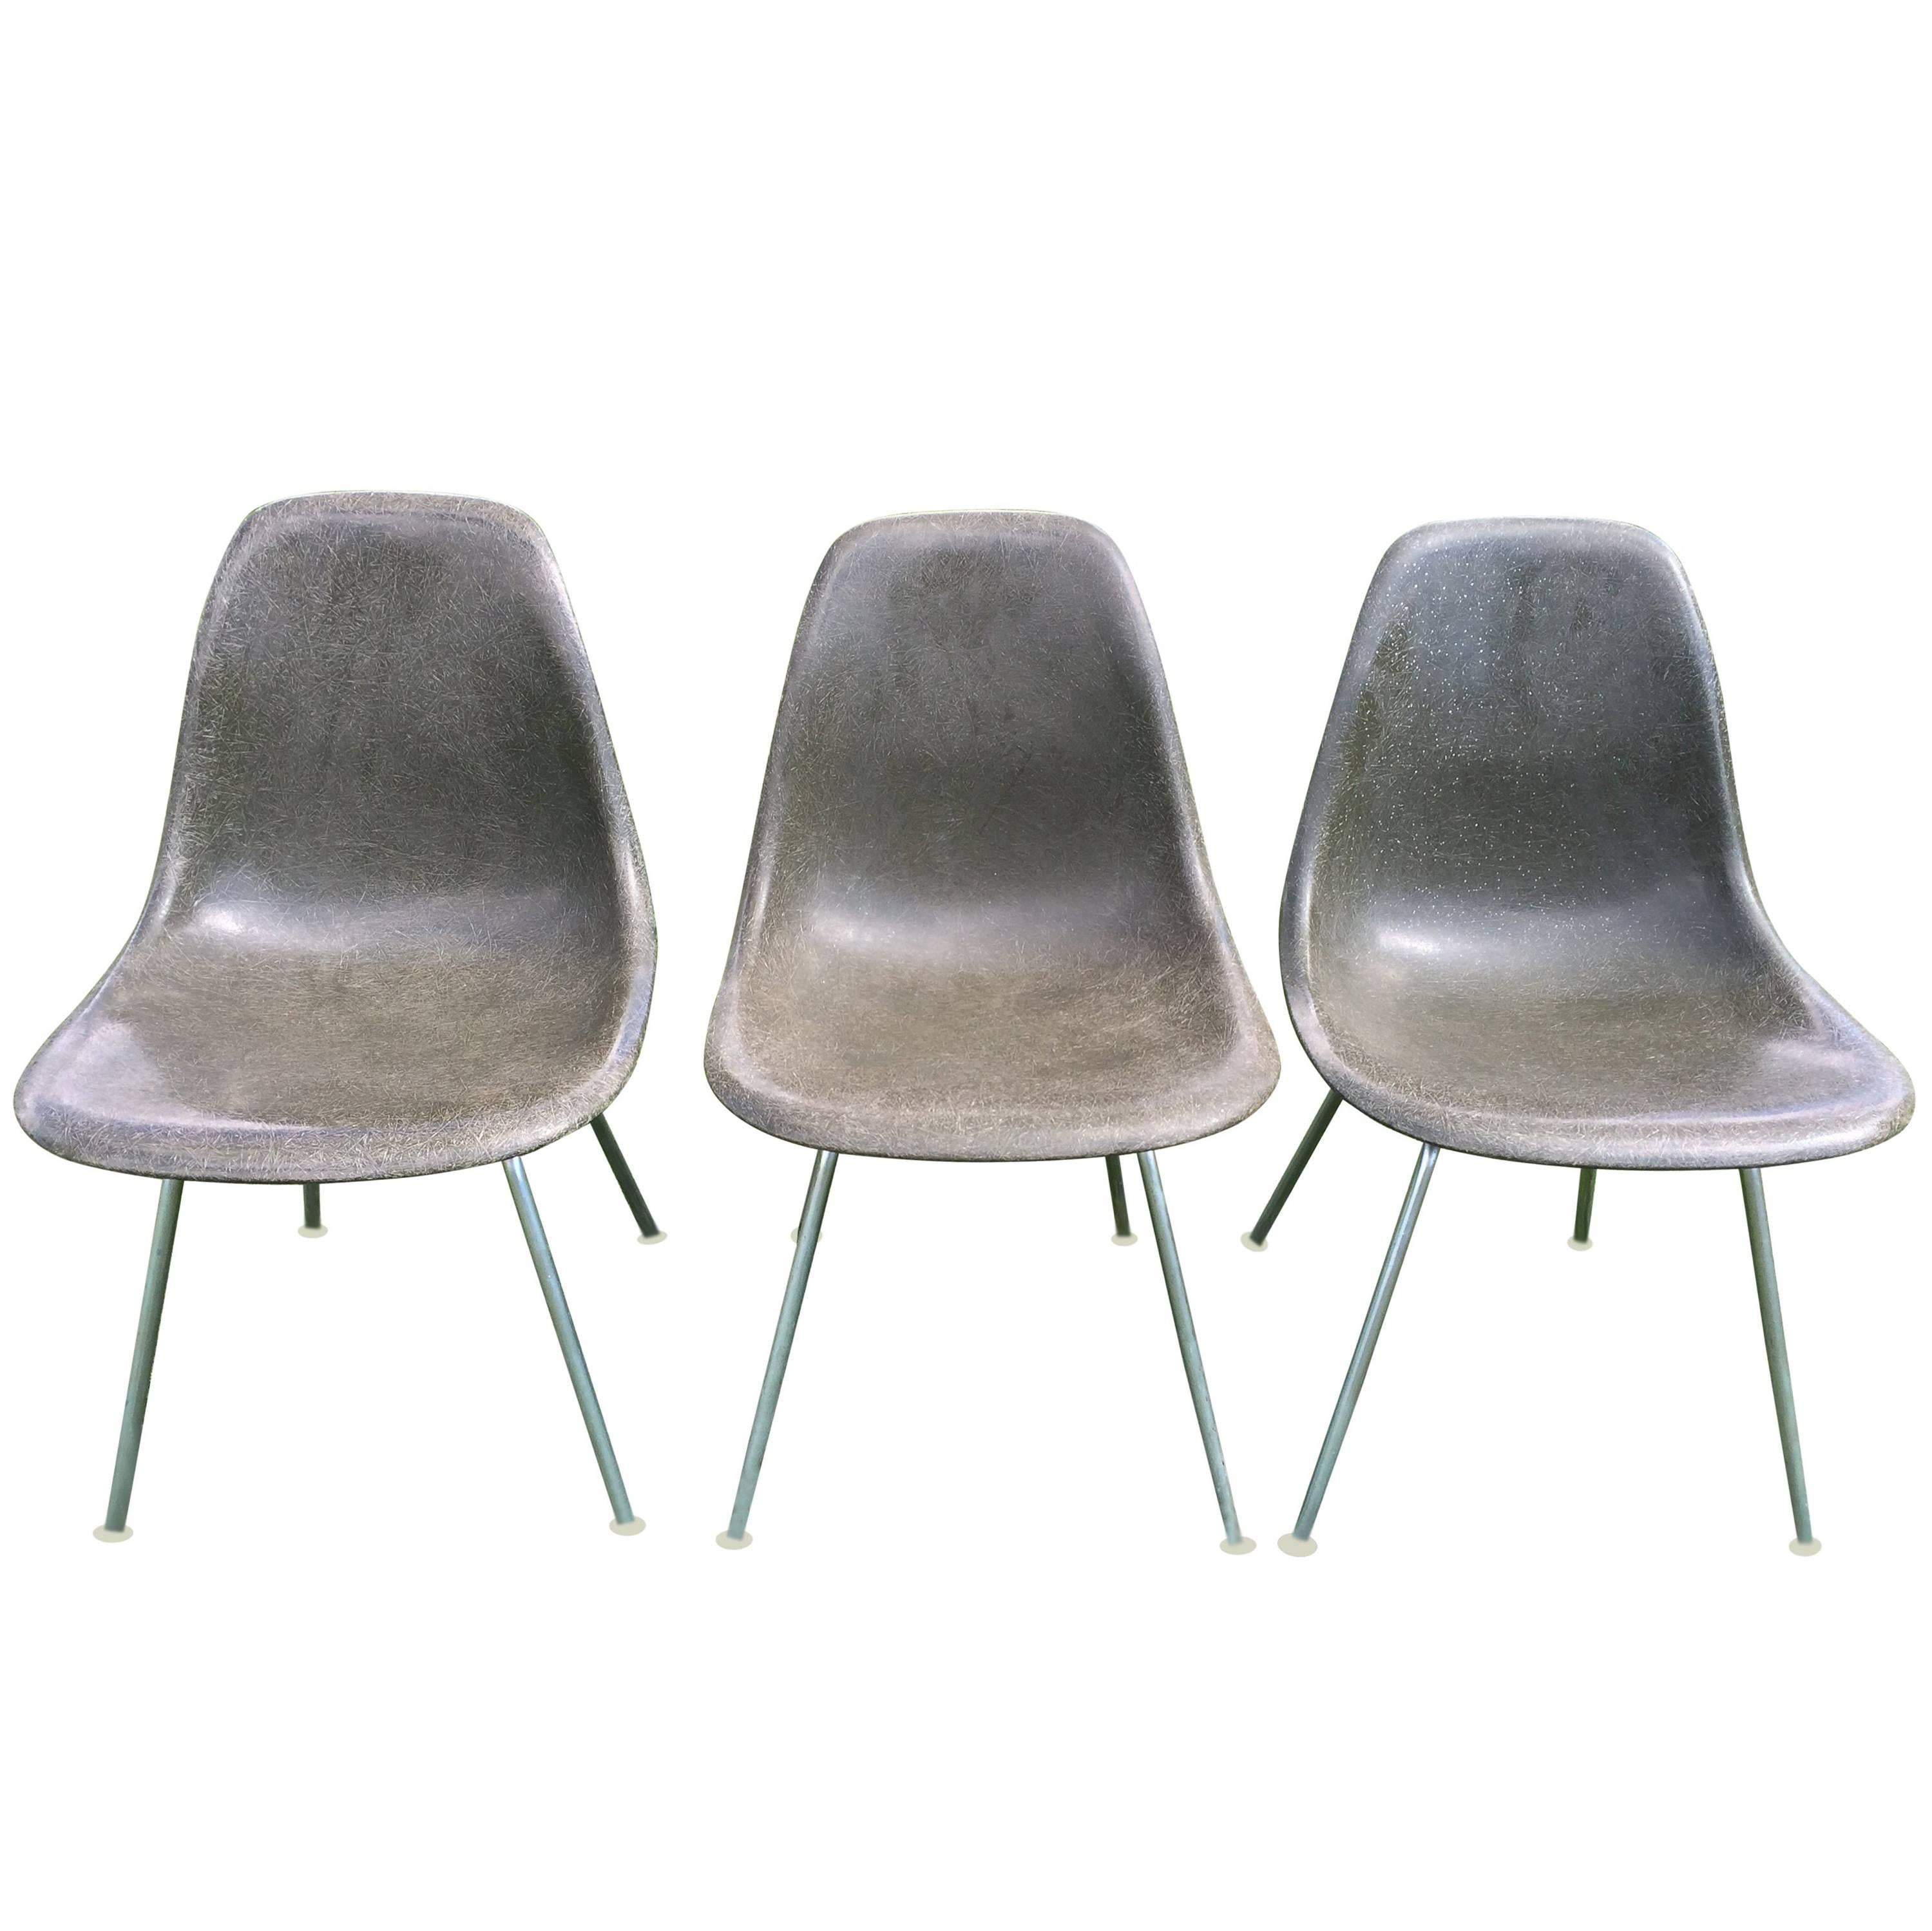 Charles Eames for Herman Miller Fiberglass Shell Side Chairs 